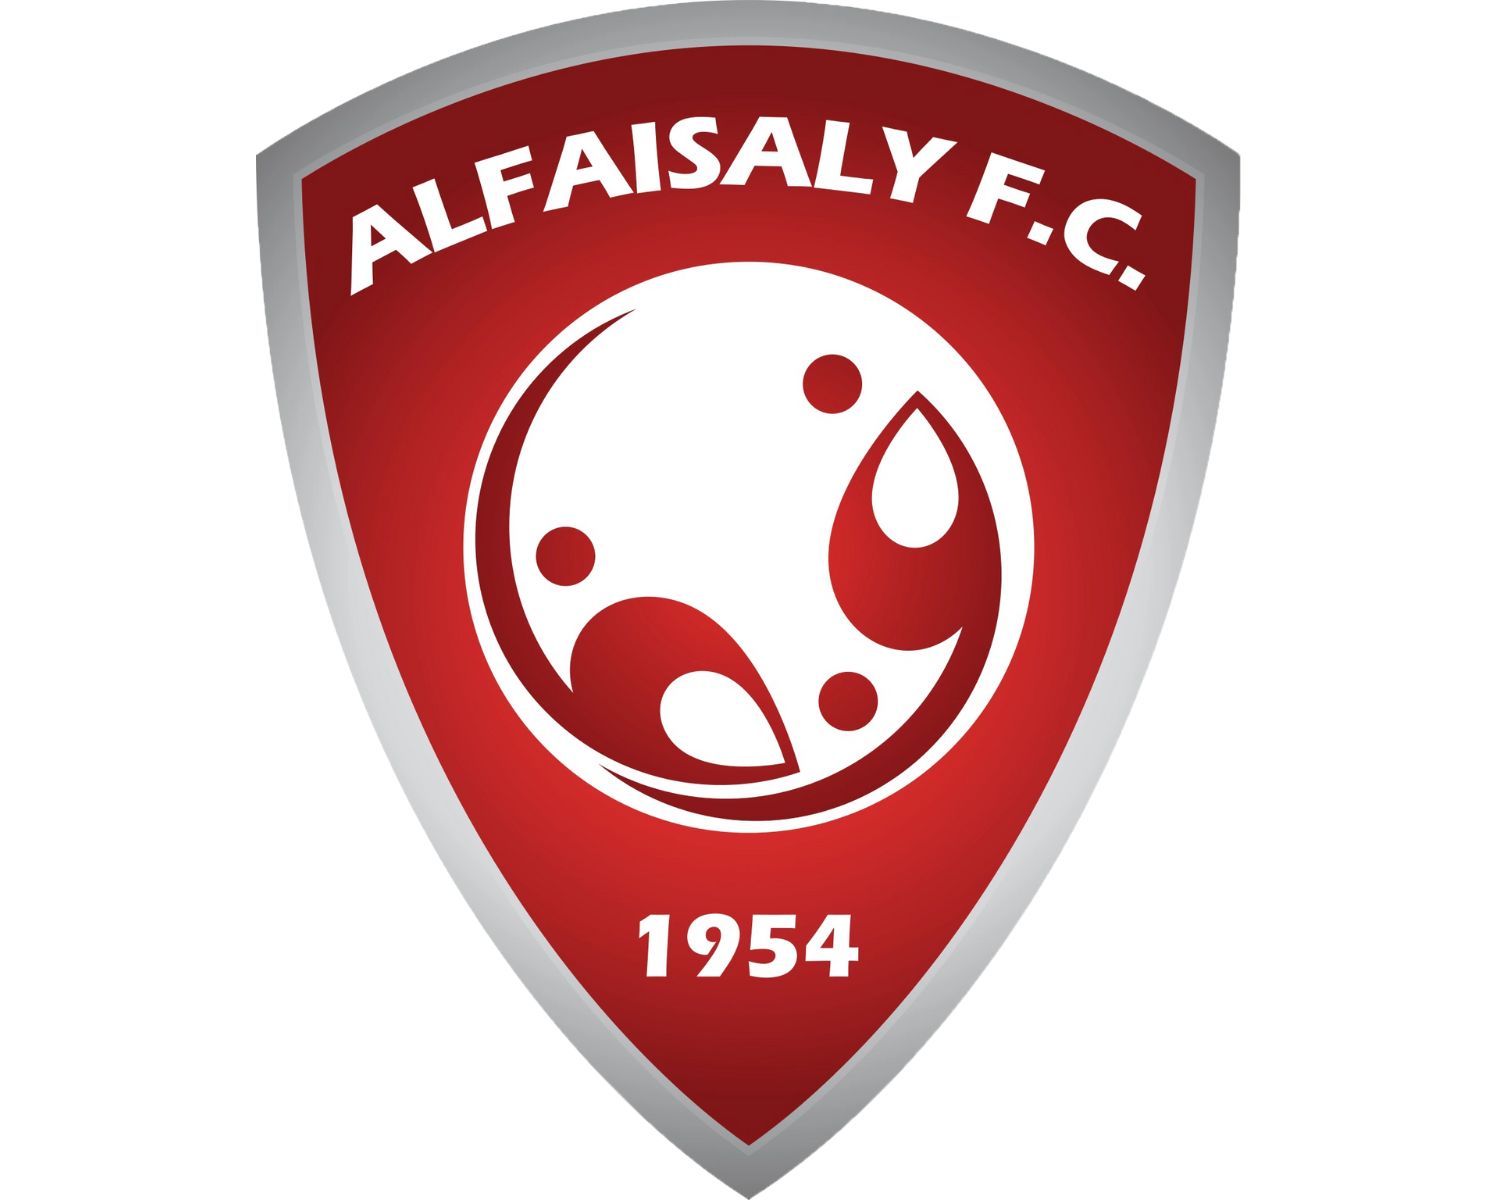 al-faisaly-fc-22-football-club-facts